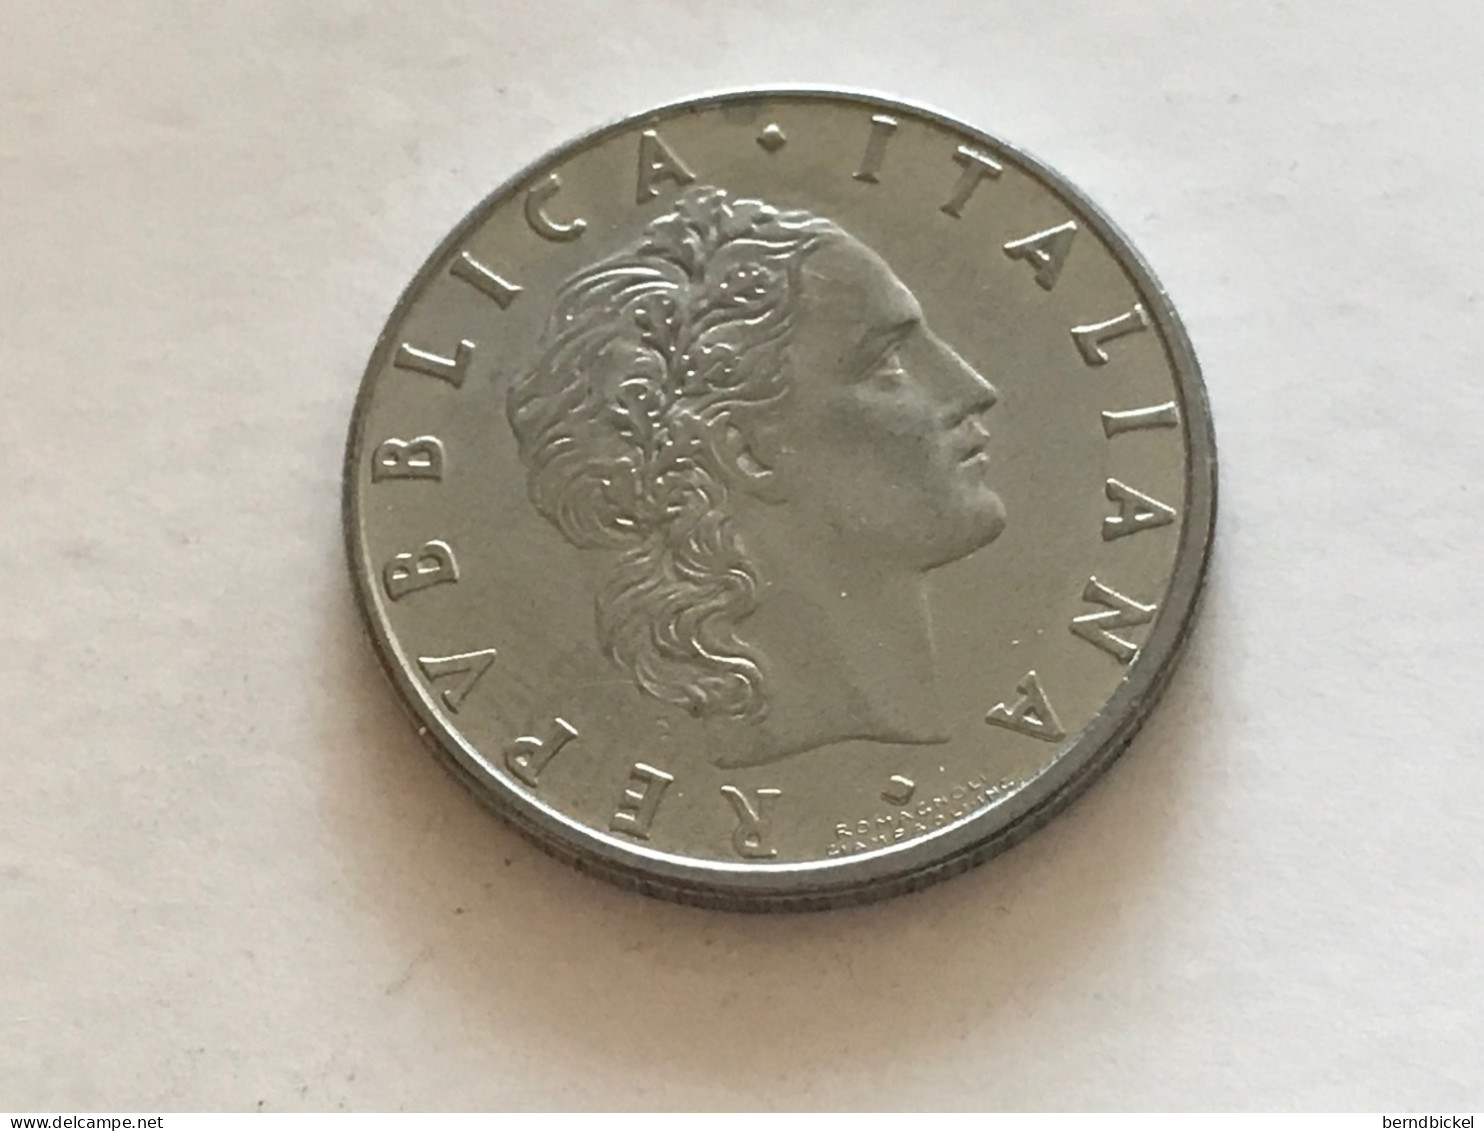 Münze Münzen Umlaufmünze Italien 50 Lire 1988 - 50 Liras